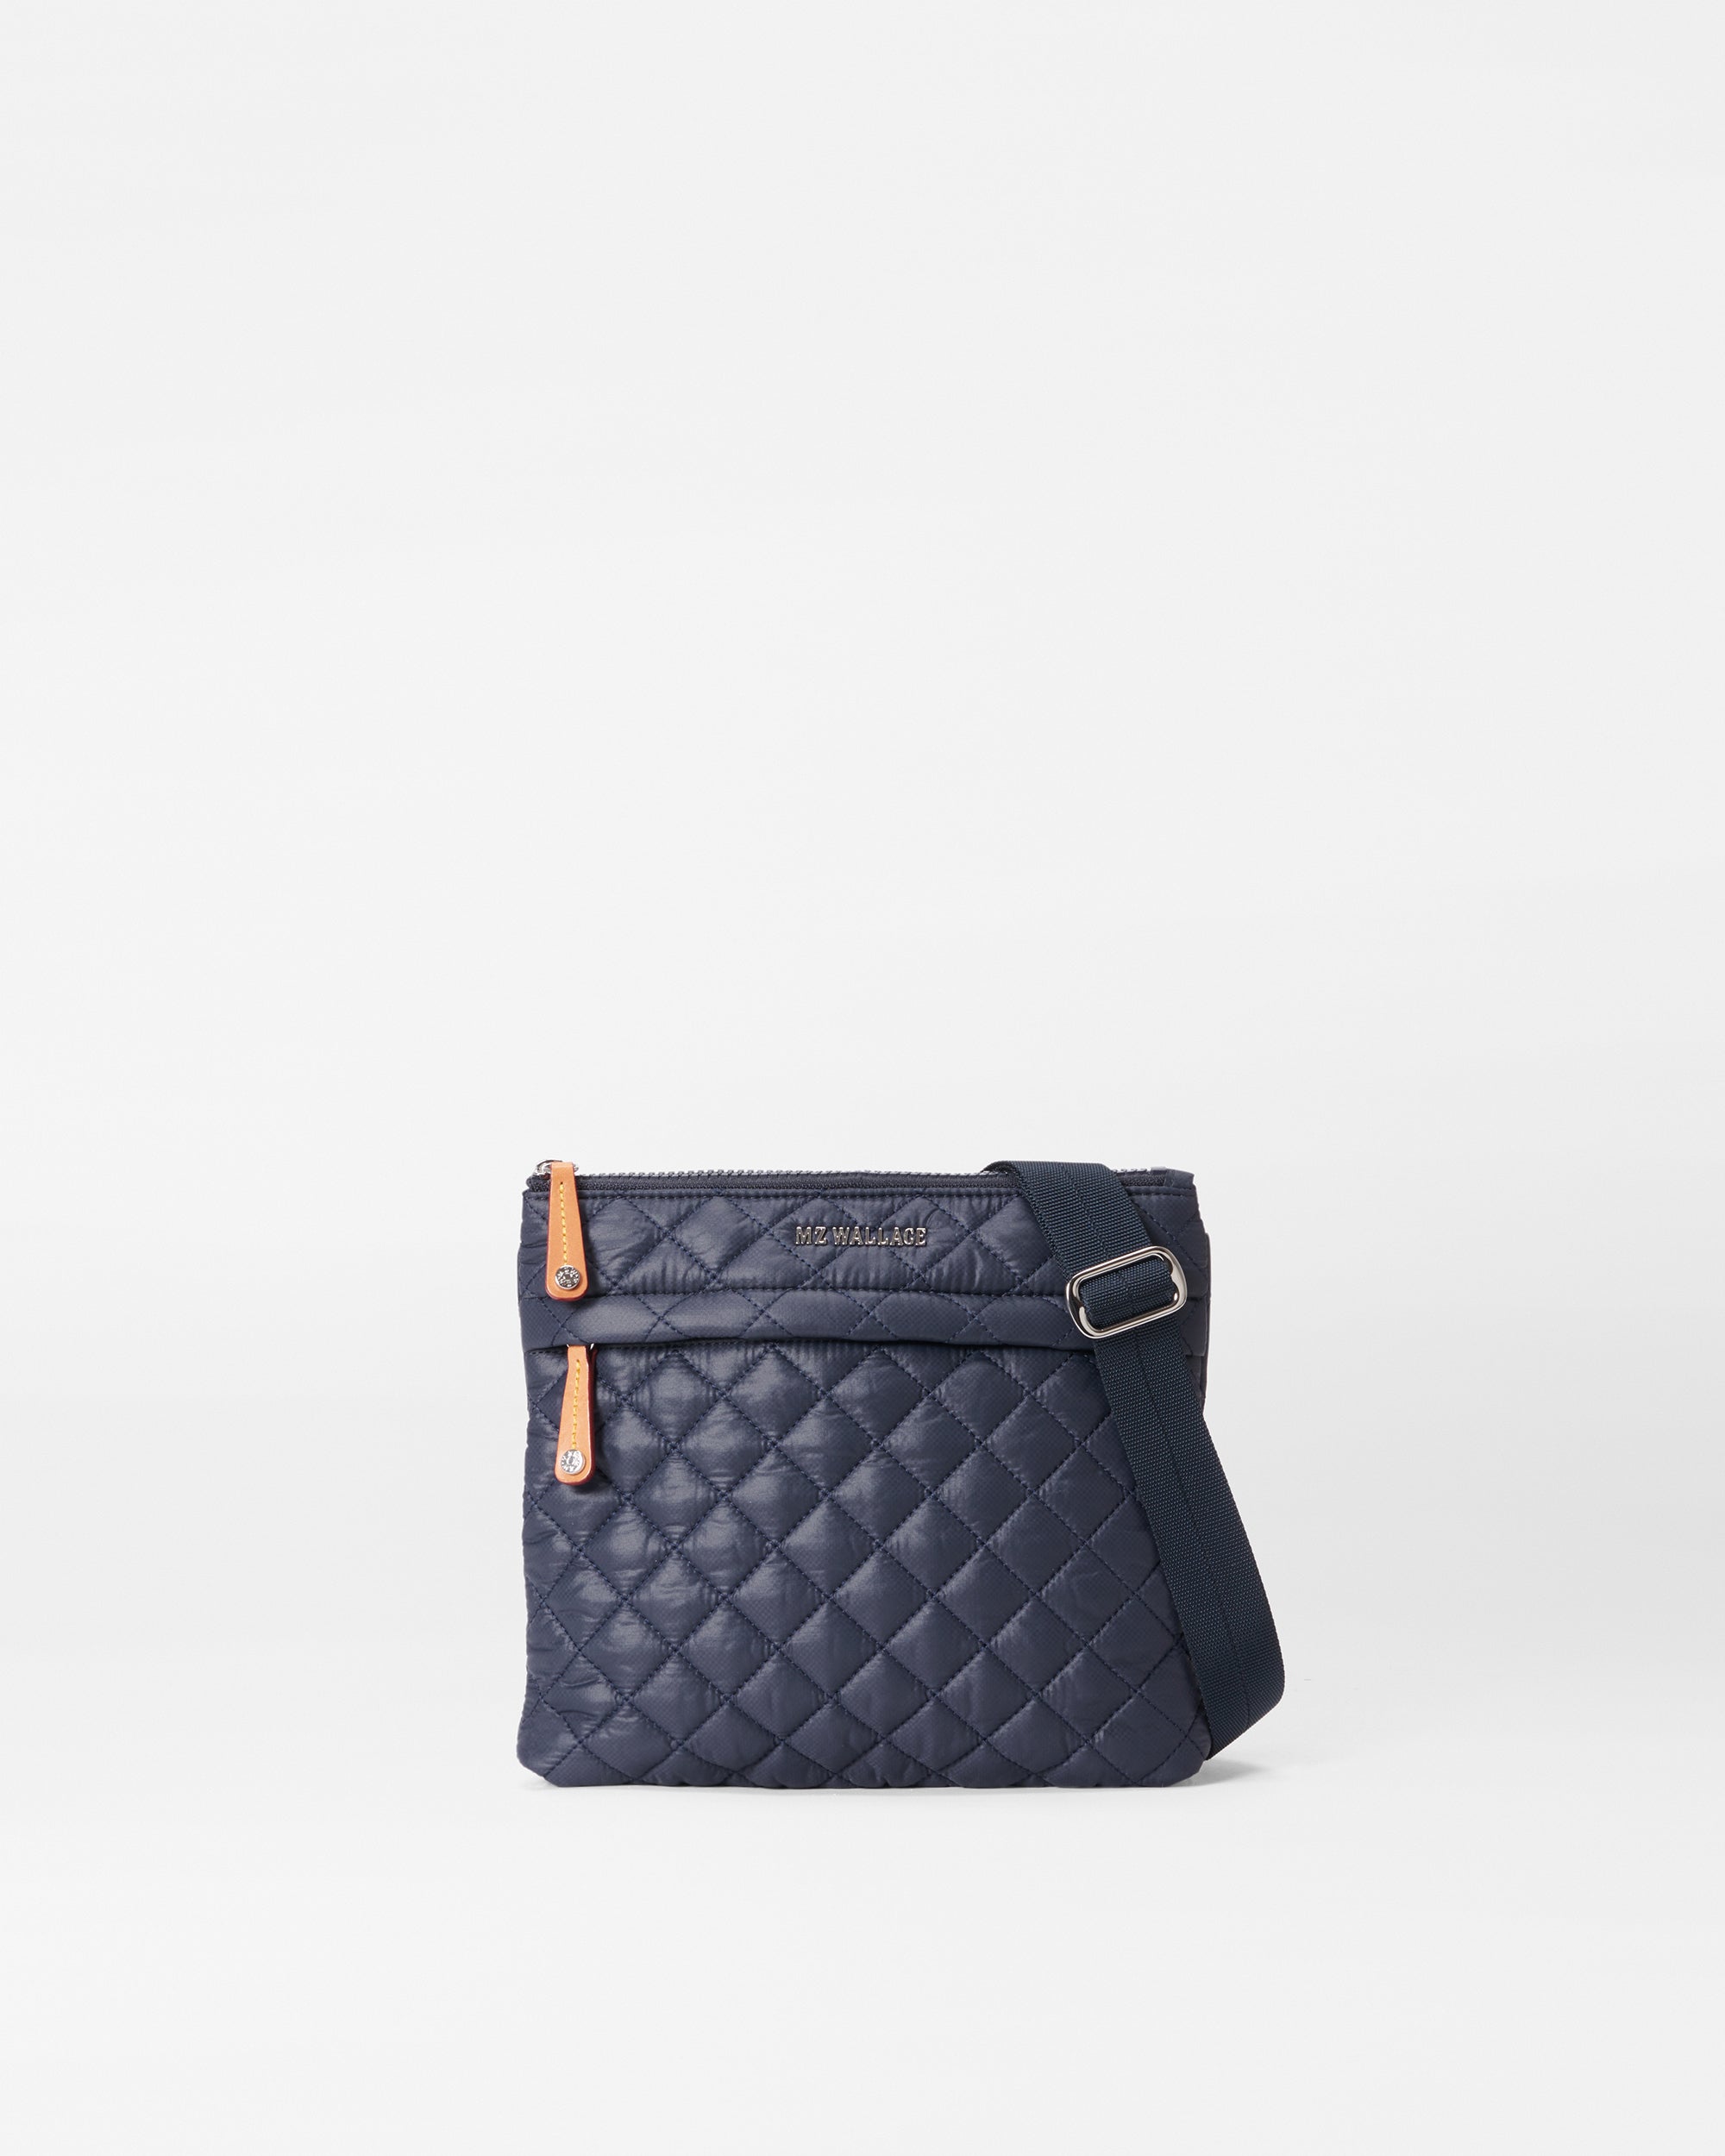 MZ Wallace Handbags, Purses & Wallets for Women